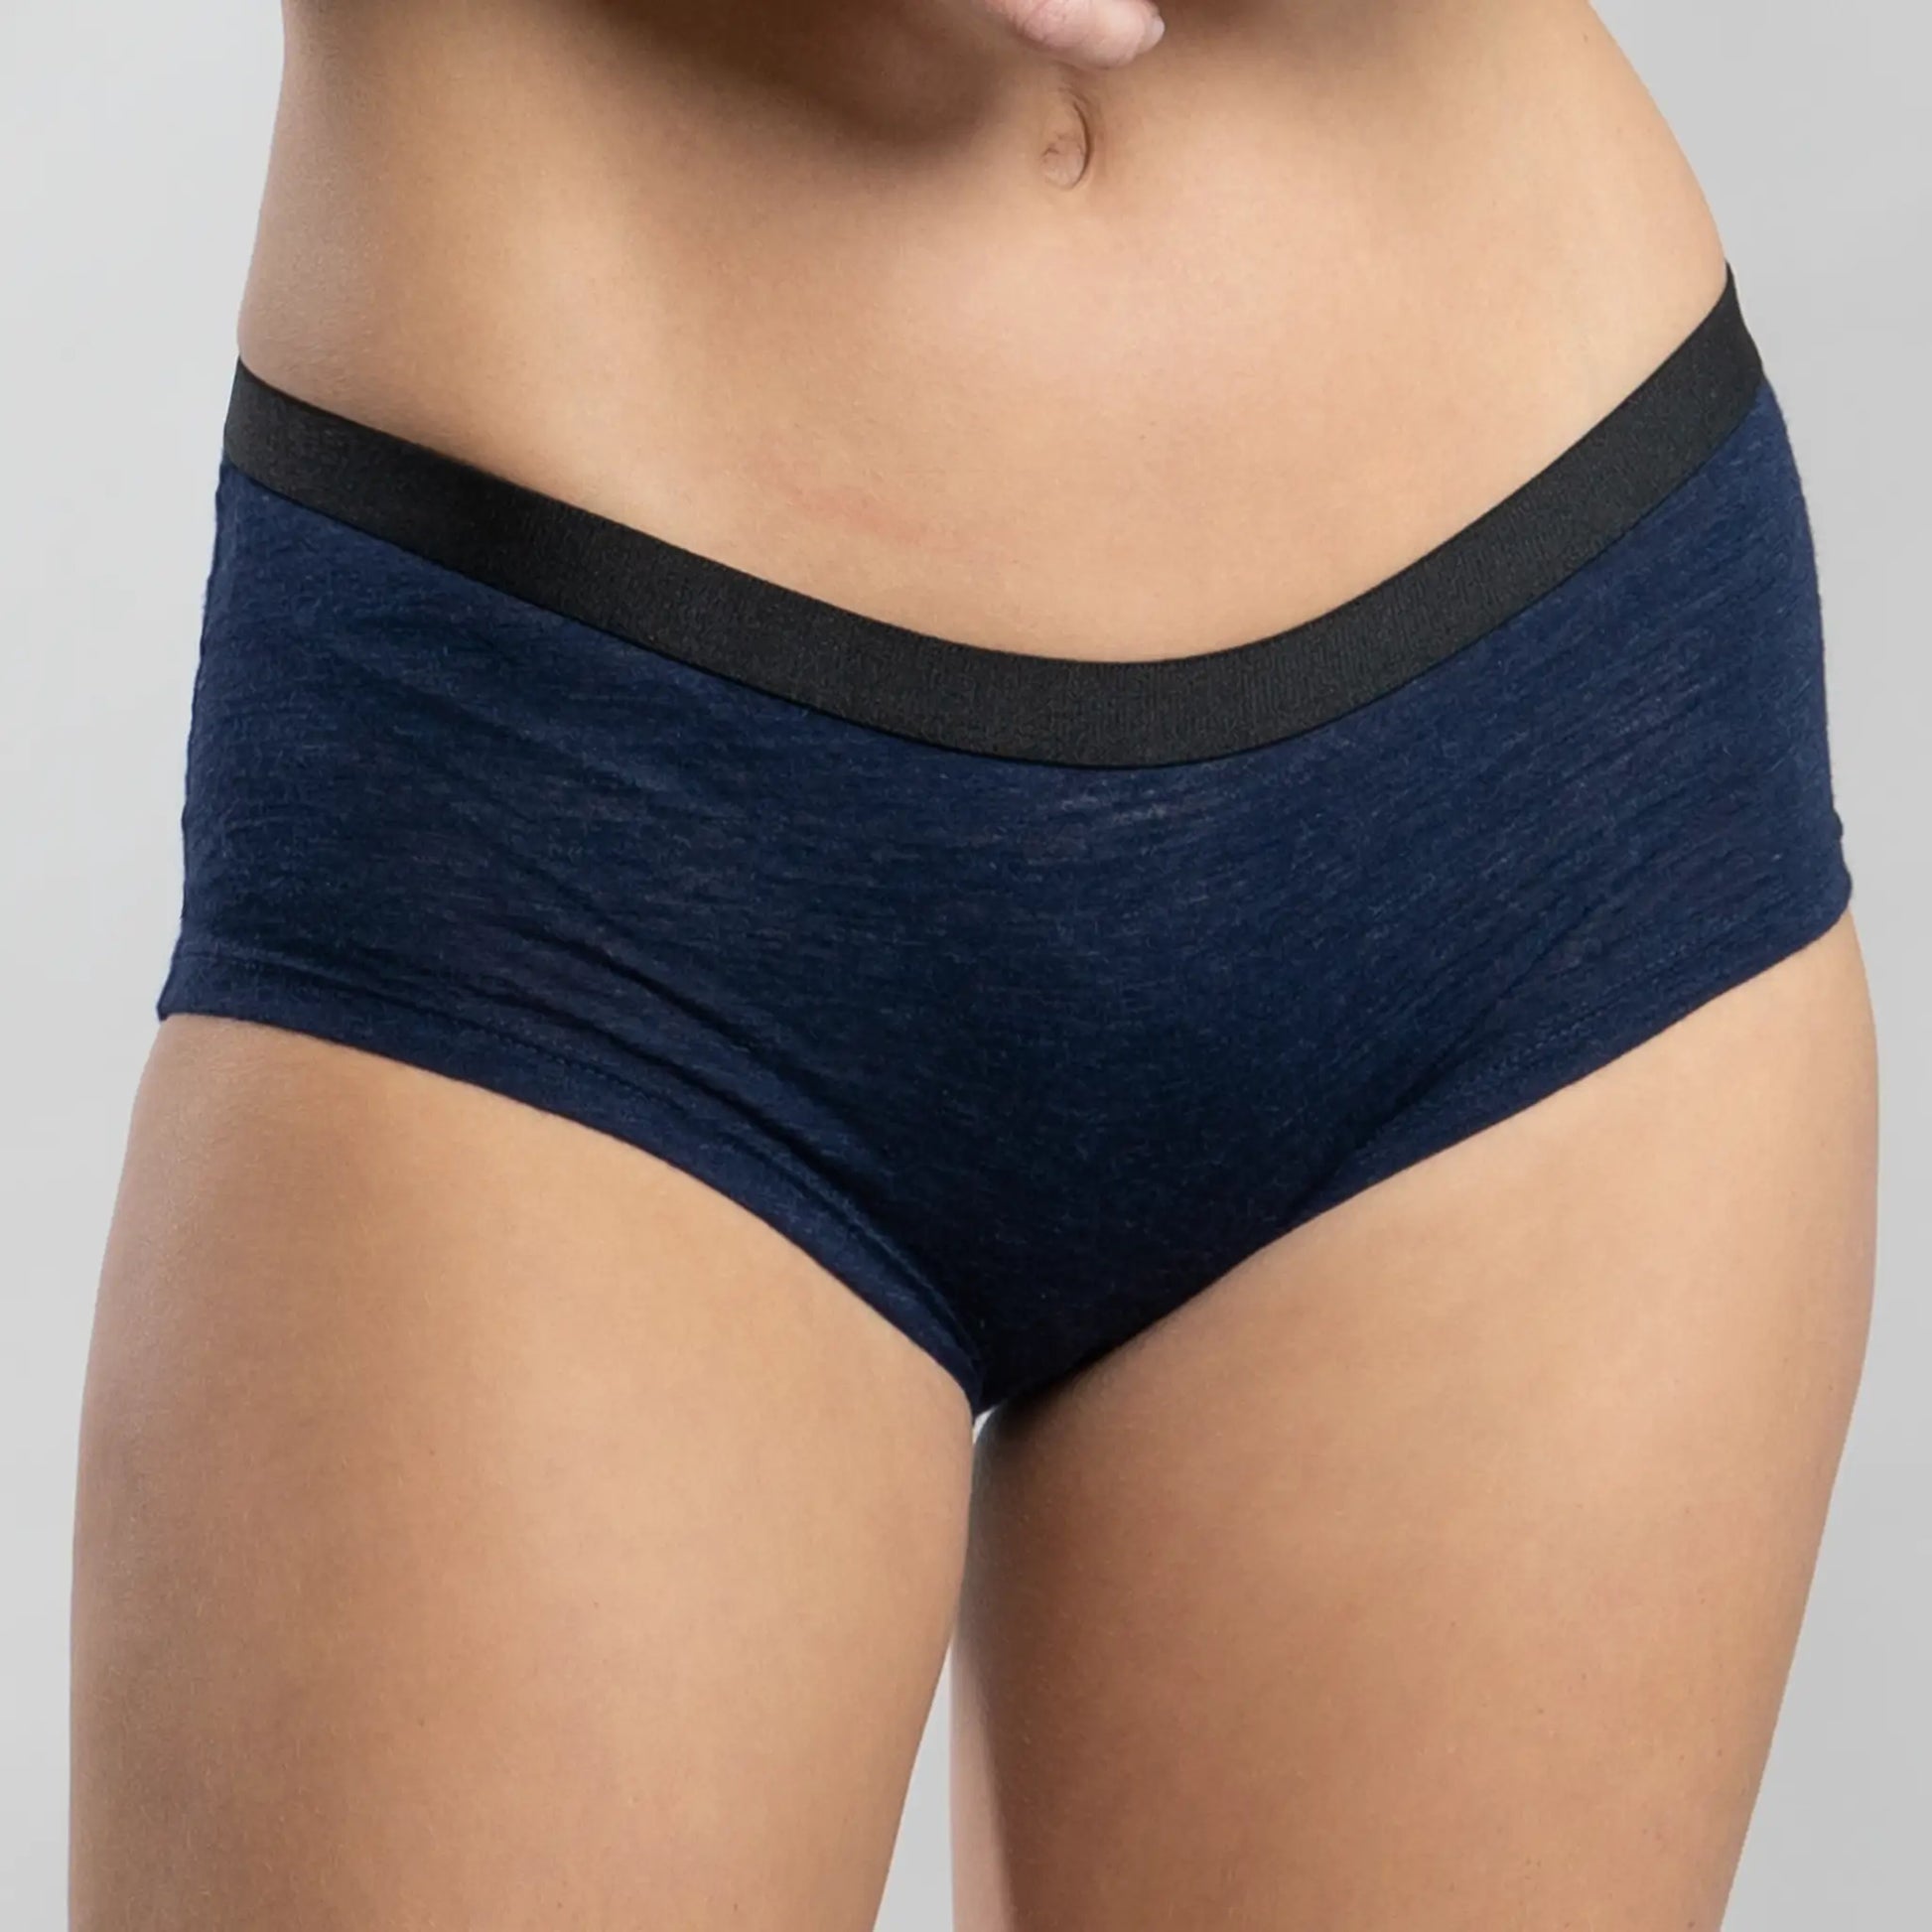 Alpaca Underwear, The Healthy Option For Comfort